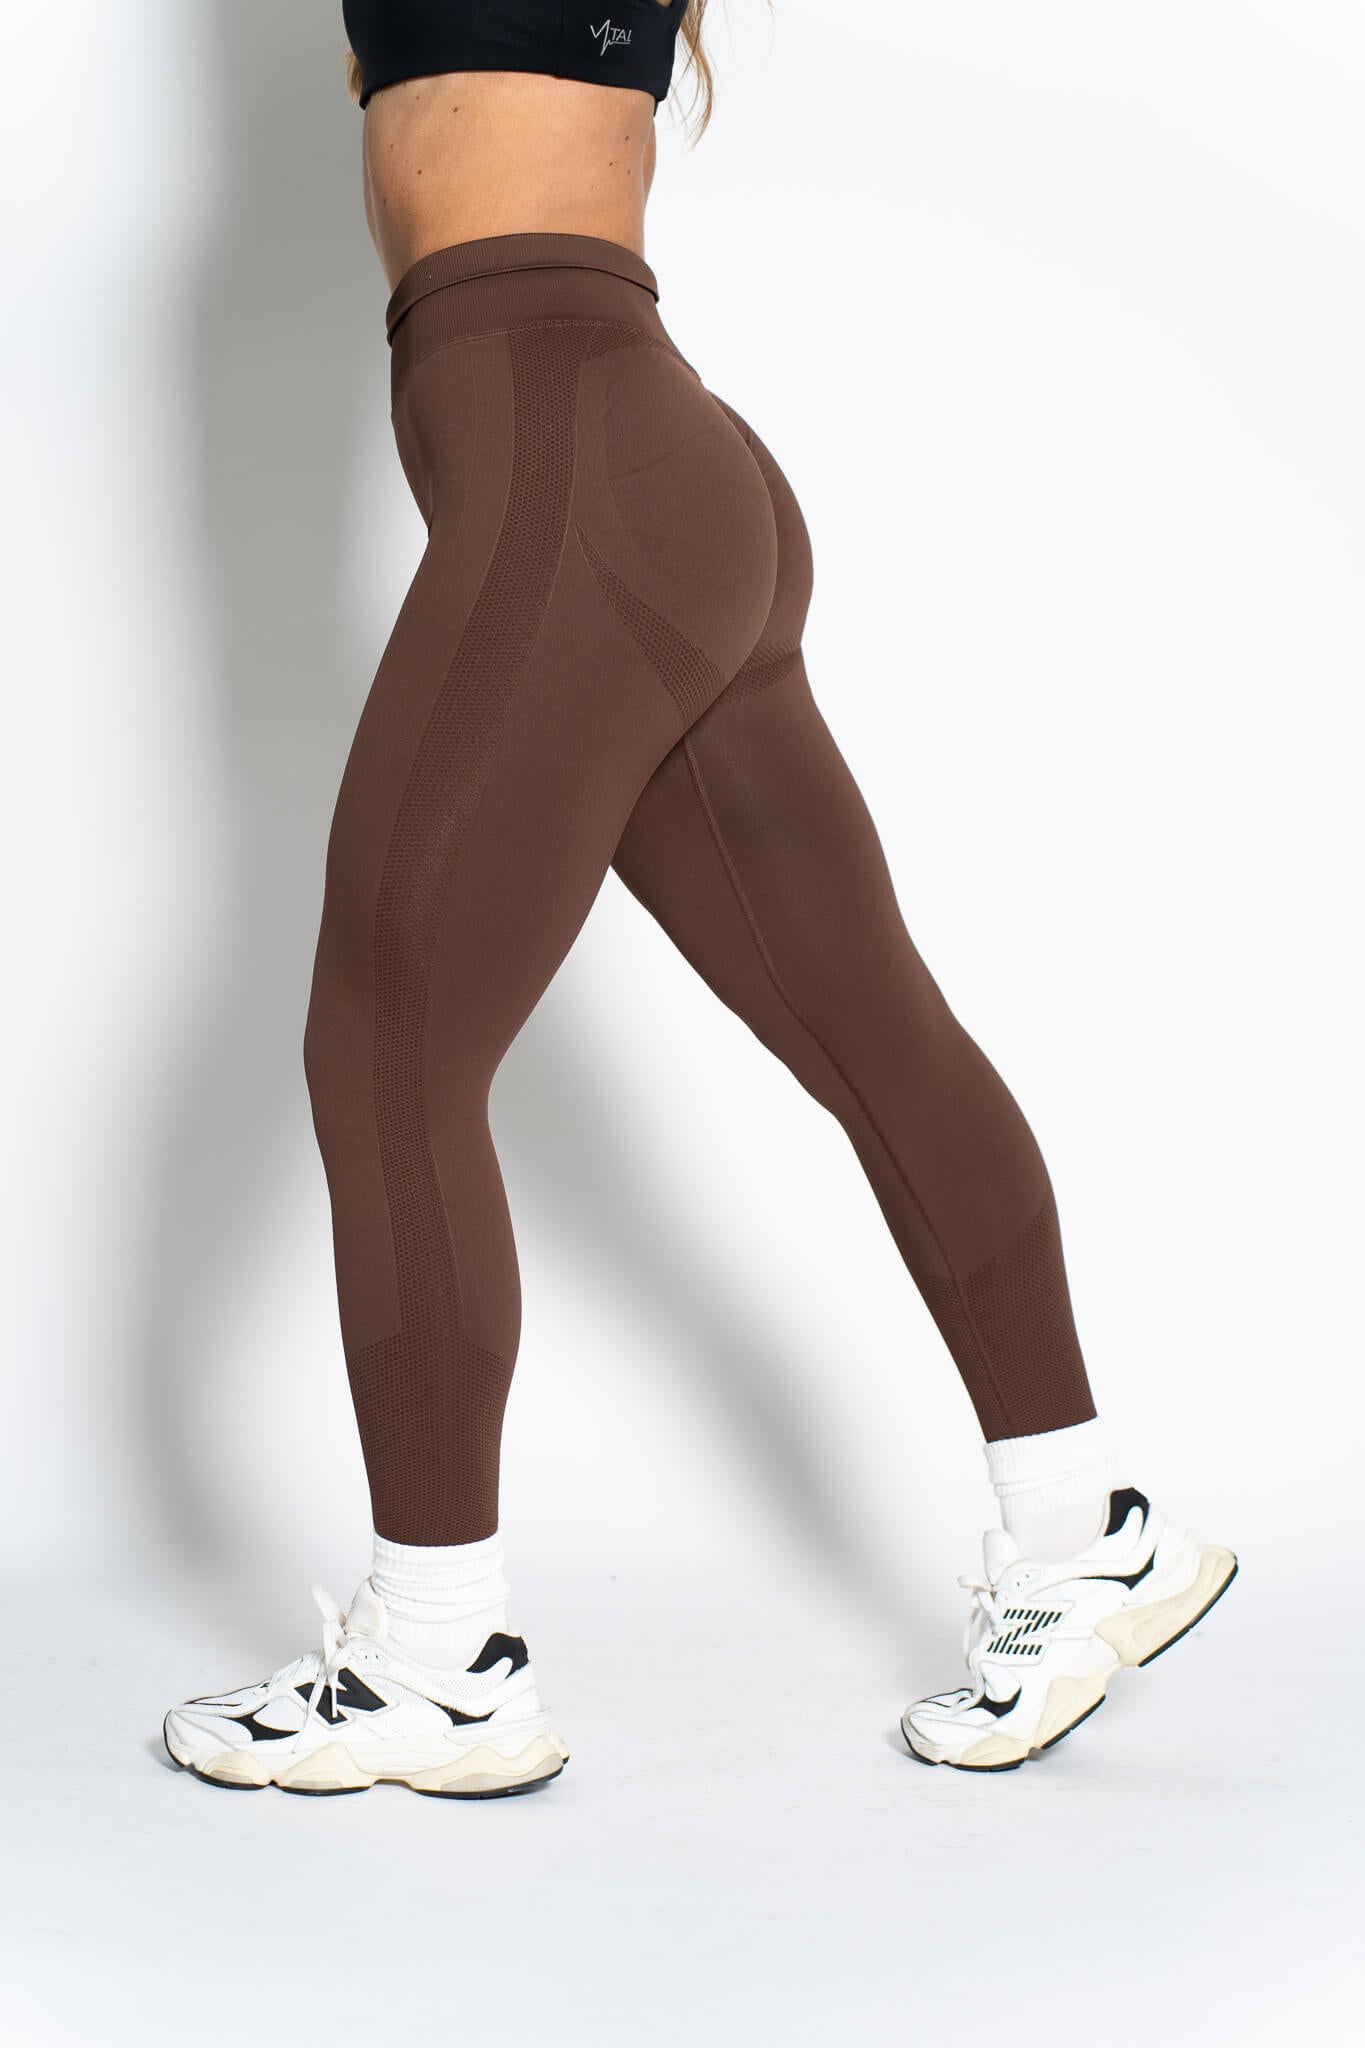 POWERASIA Seamless Leggings for Women High Waist Workout Vital Leggings  Scrunch Butt Lift Yoga Pants Smile Contour Tights at  Women's  Clothing store